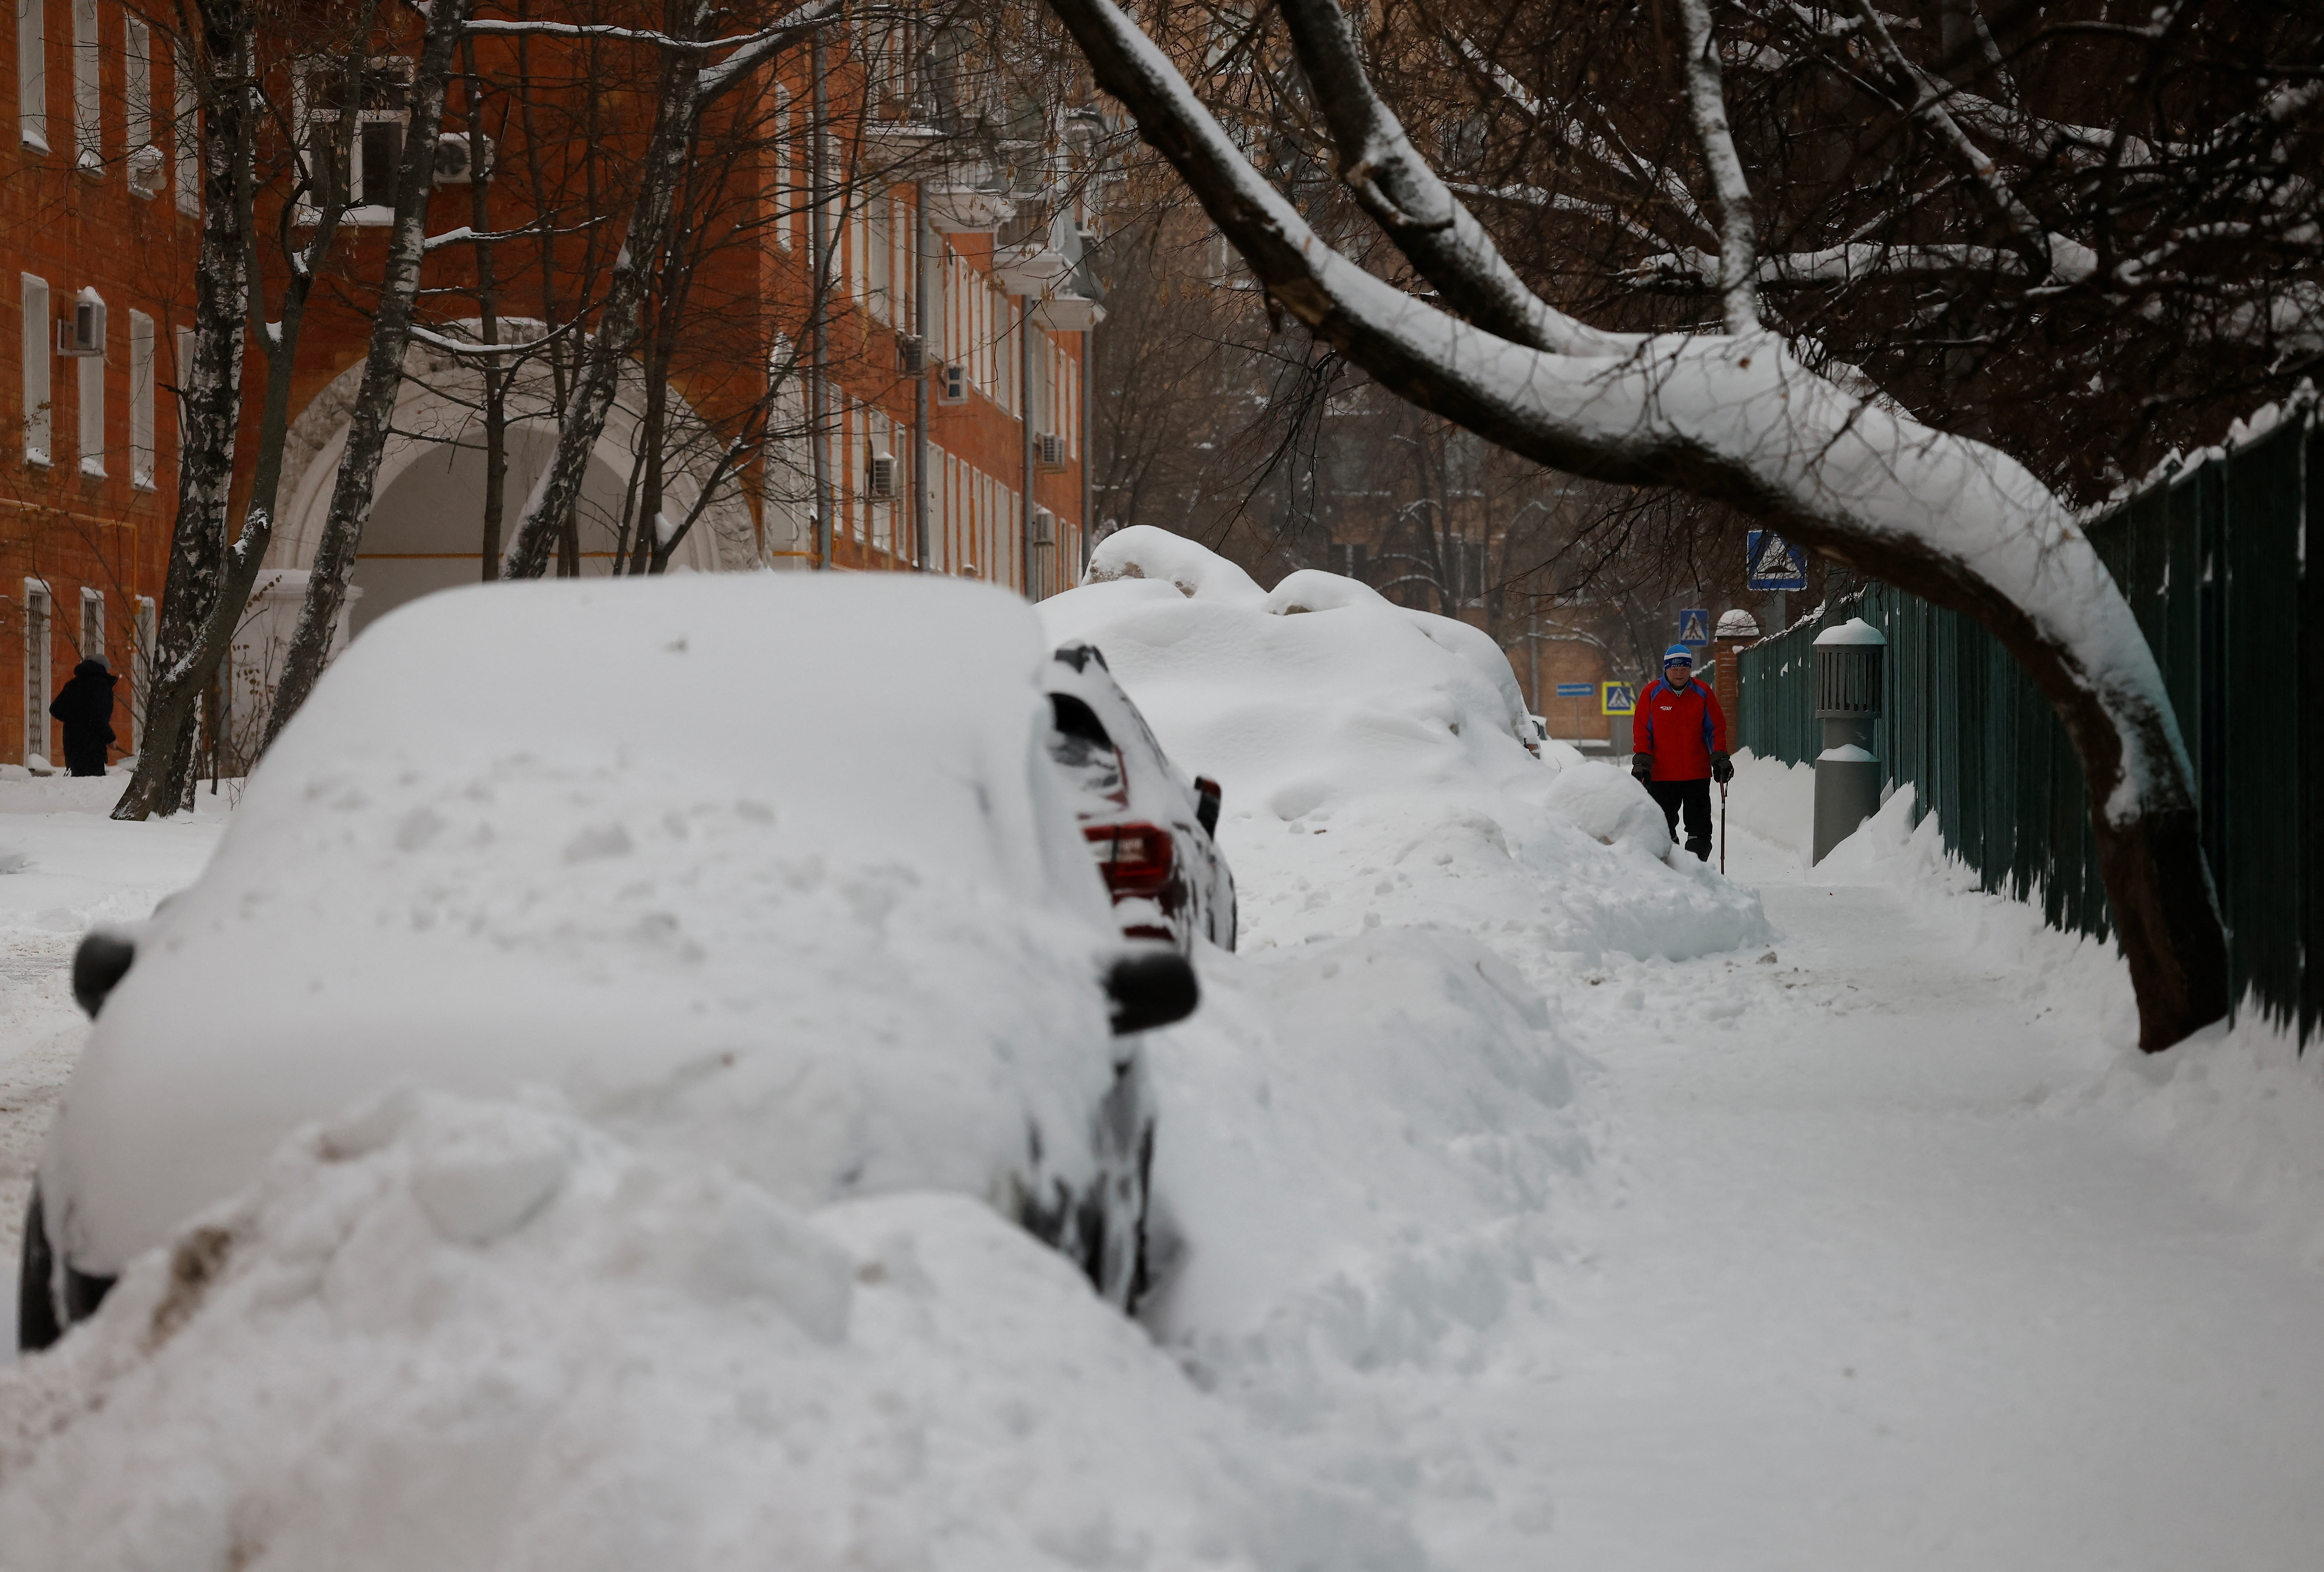 Blizzards sweep across Russia bringing massive snow falls